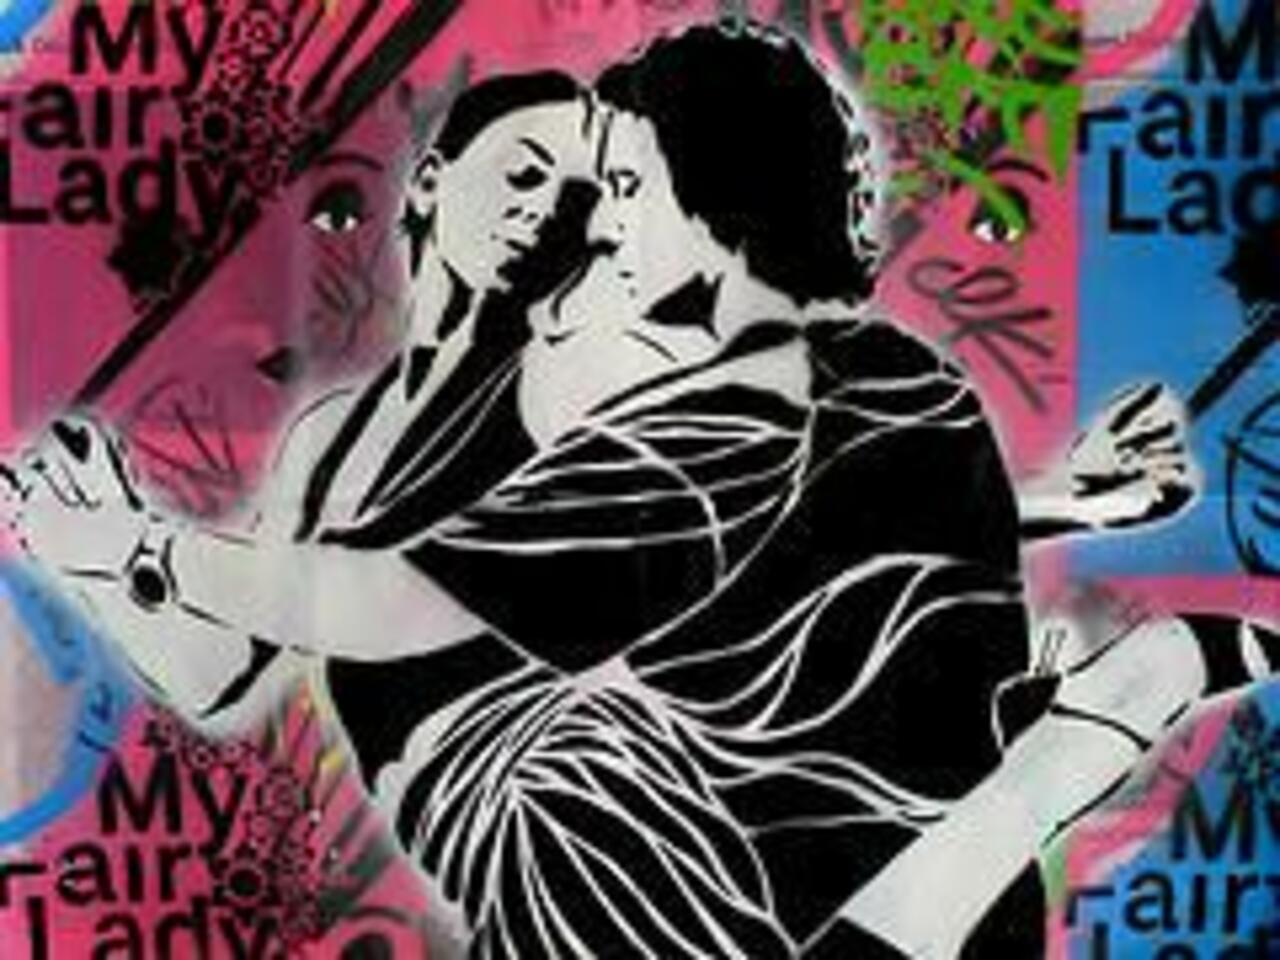 In love with an uptown girl ♥ Cha cha or jive. You decide #streetart #graffiti #dance #NorthCarolina #SCD http://t.co/vWXeoGRsfV